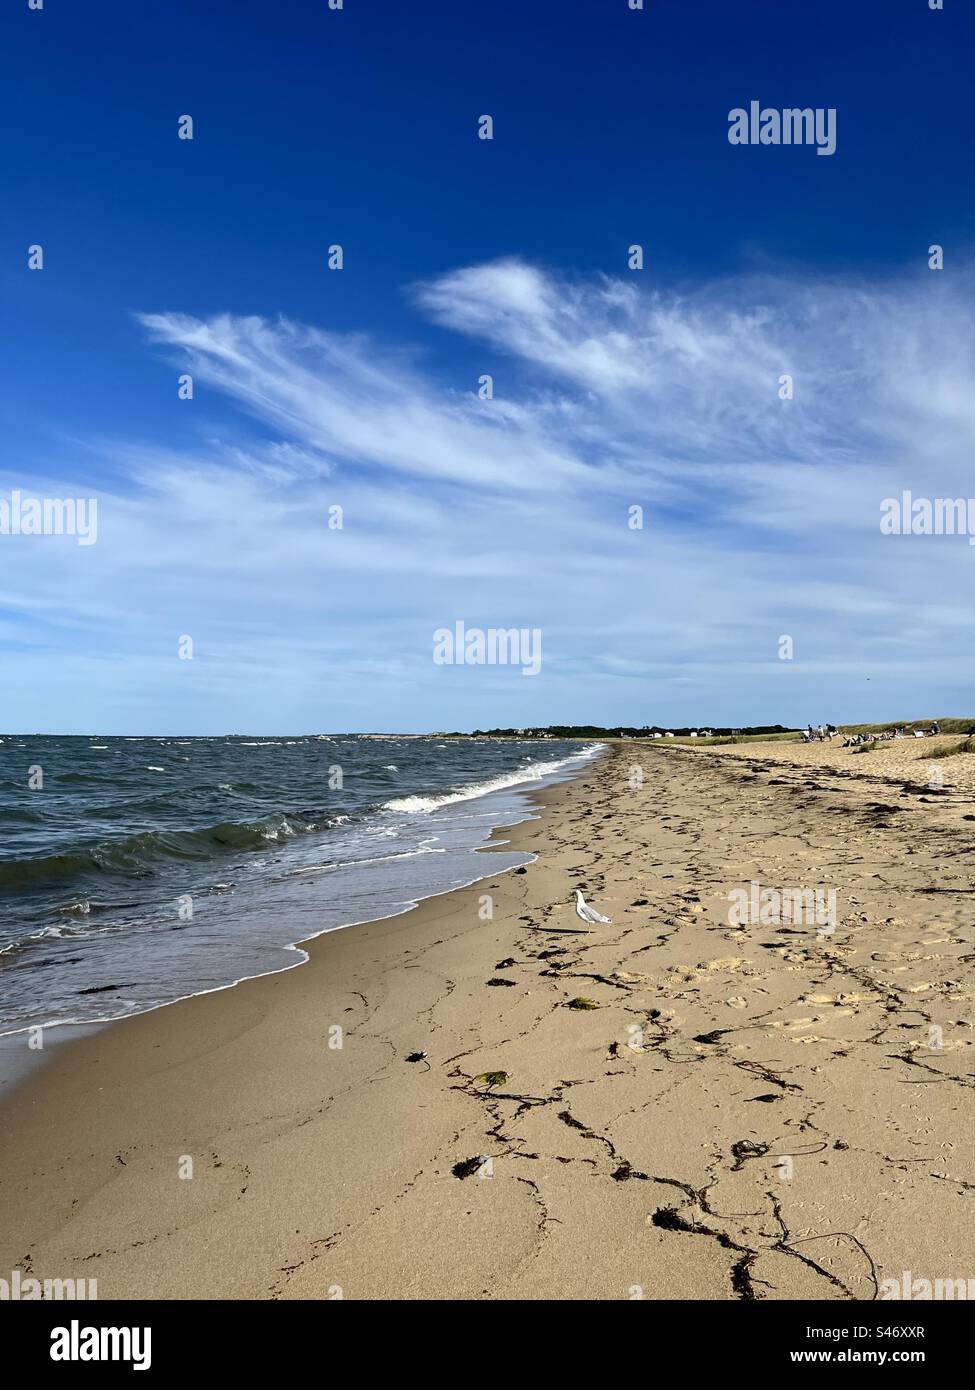 Deserted beach on Martha’s Vineyard Stock Photo - Alamy